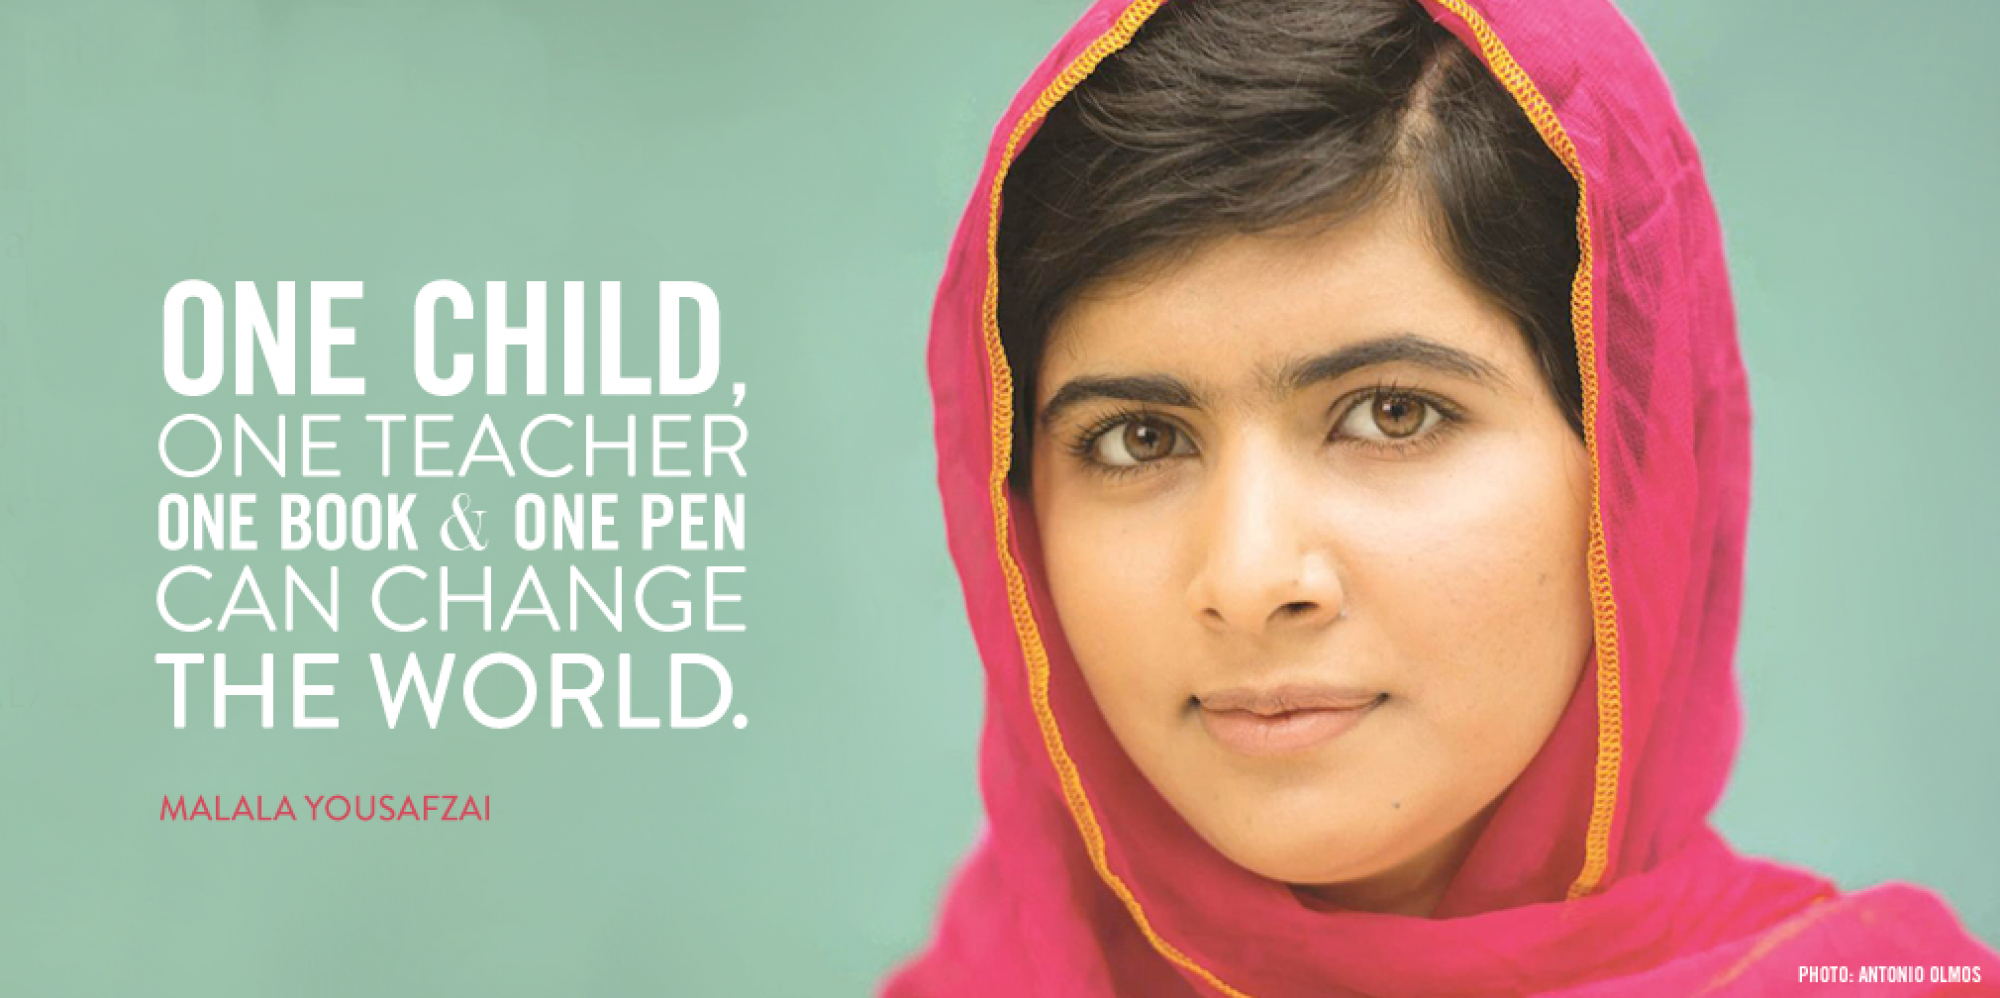 Class Dismissed – I am Malala